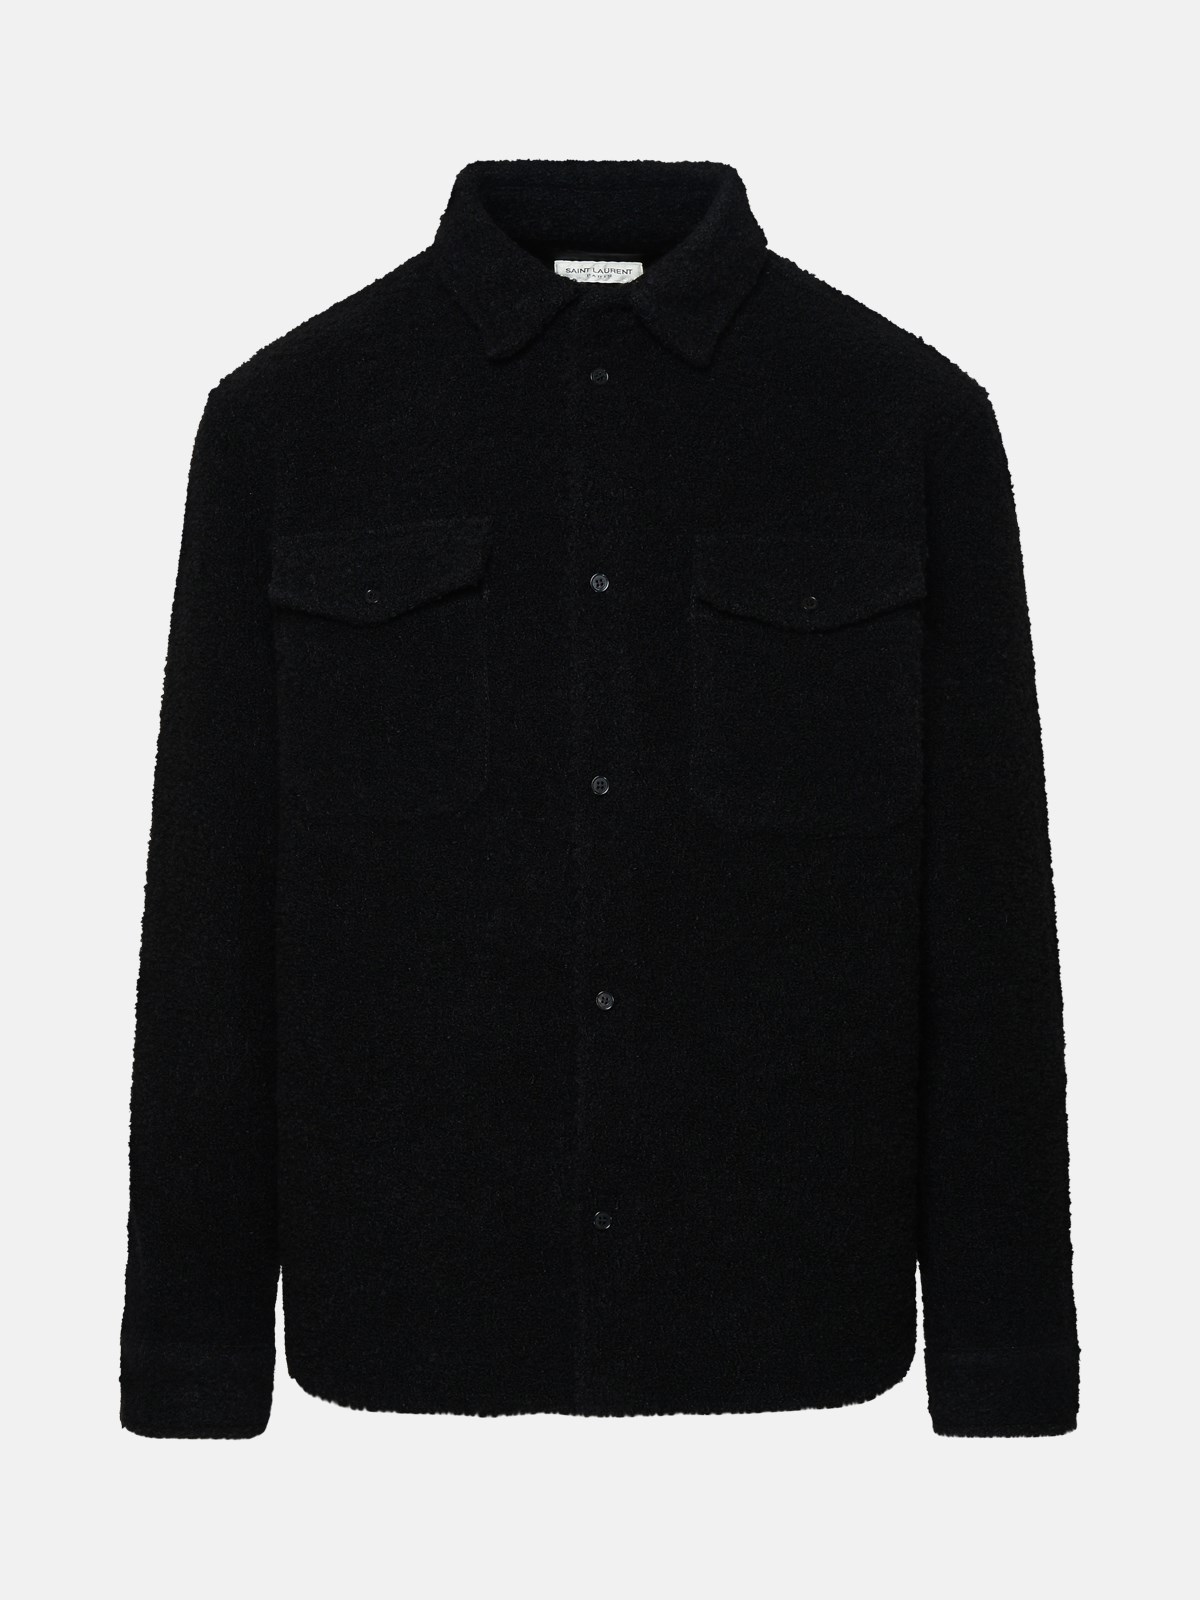 Saint Laurent Black Wool Blend Shirt